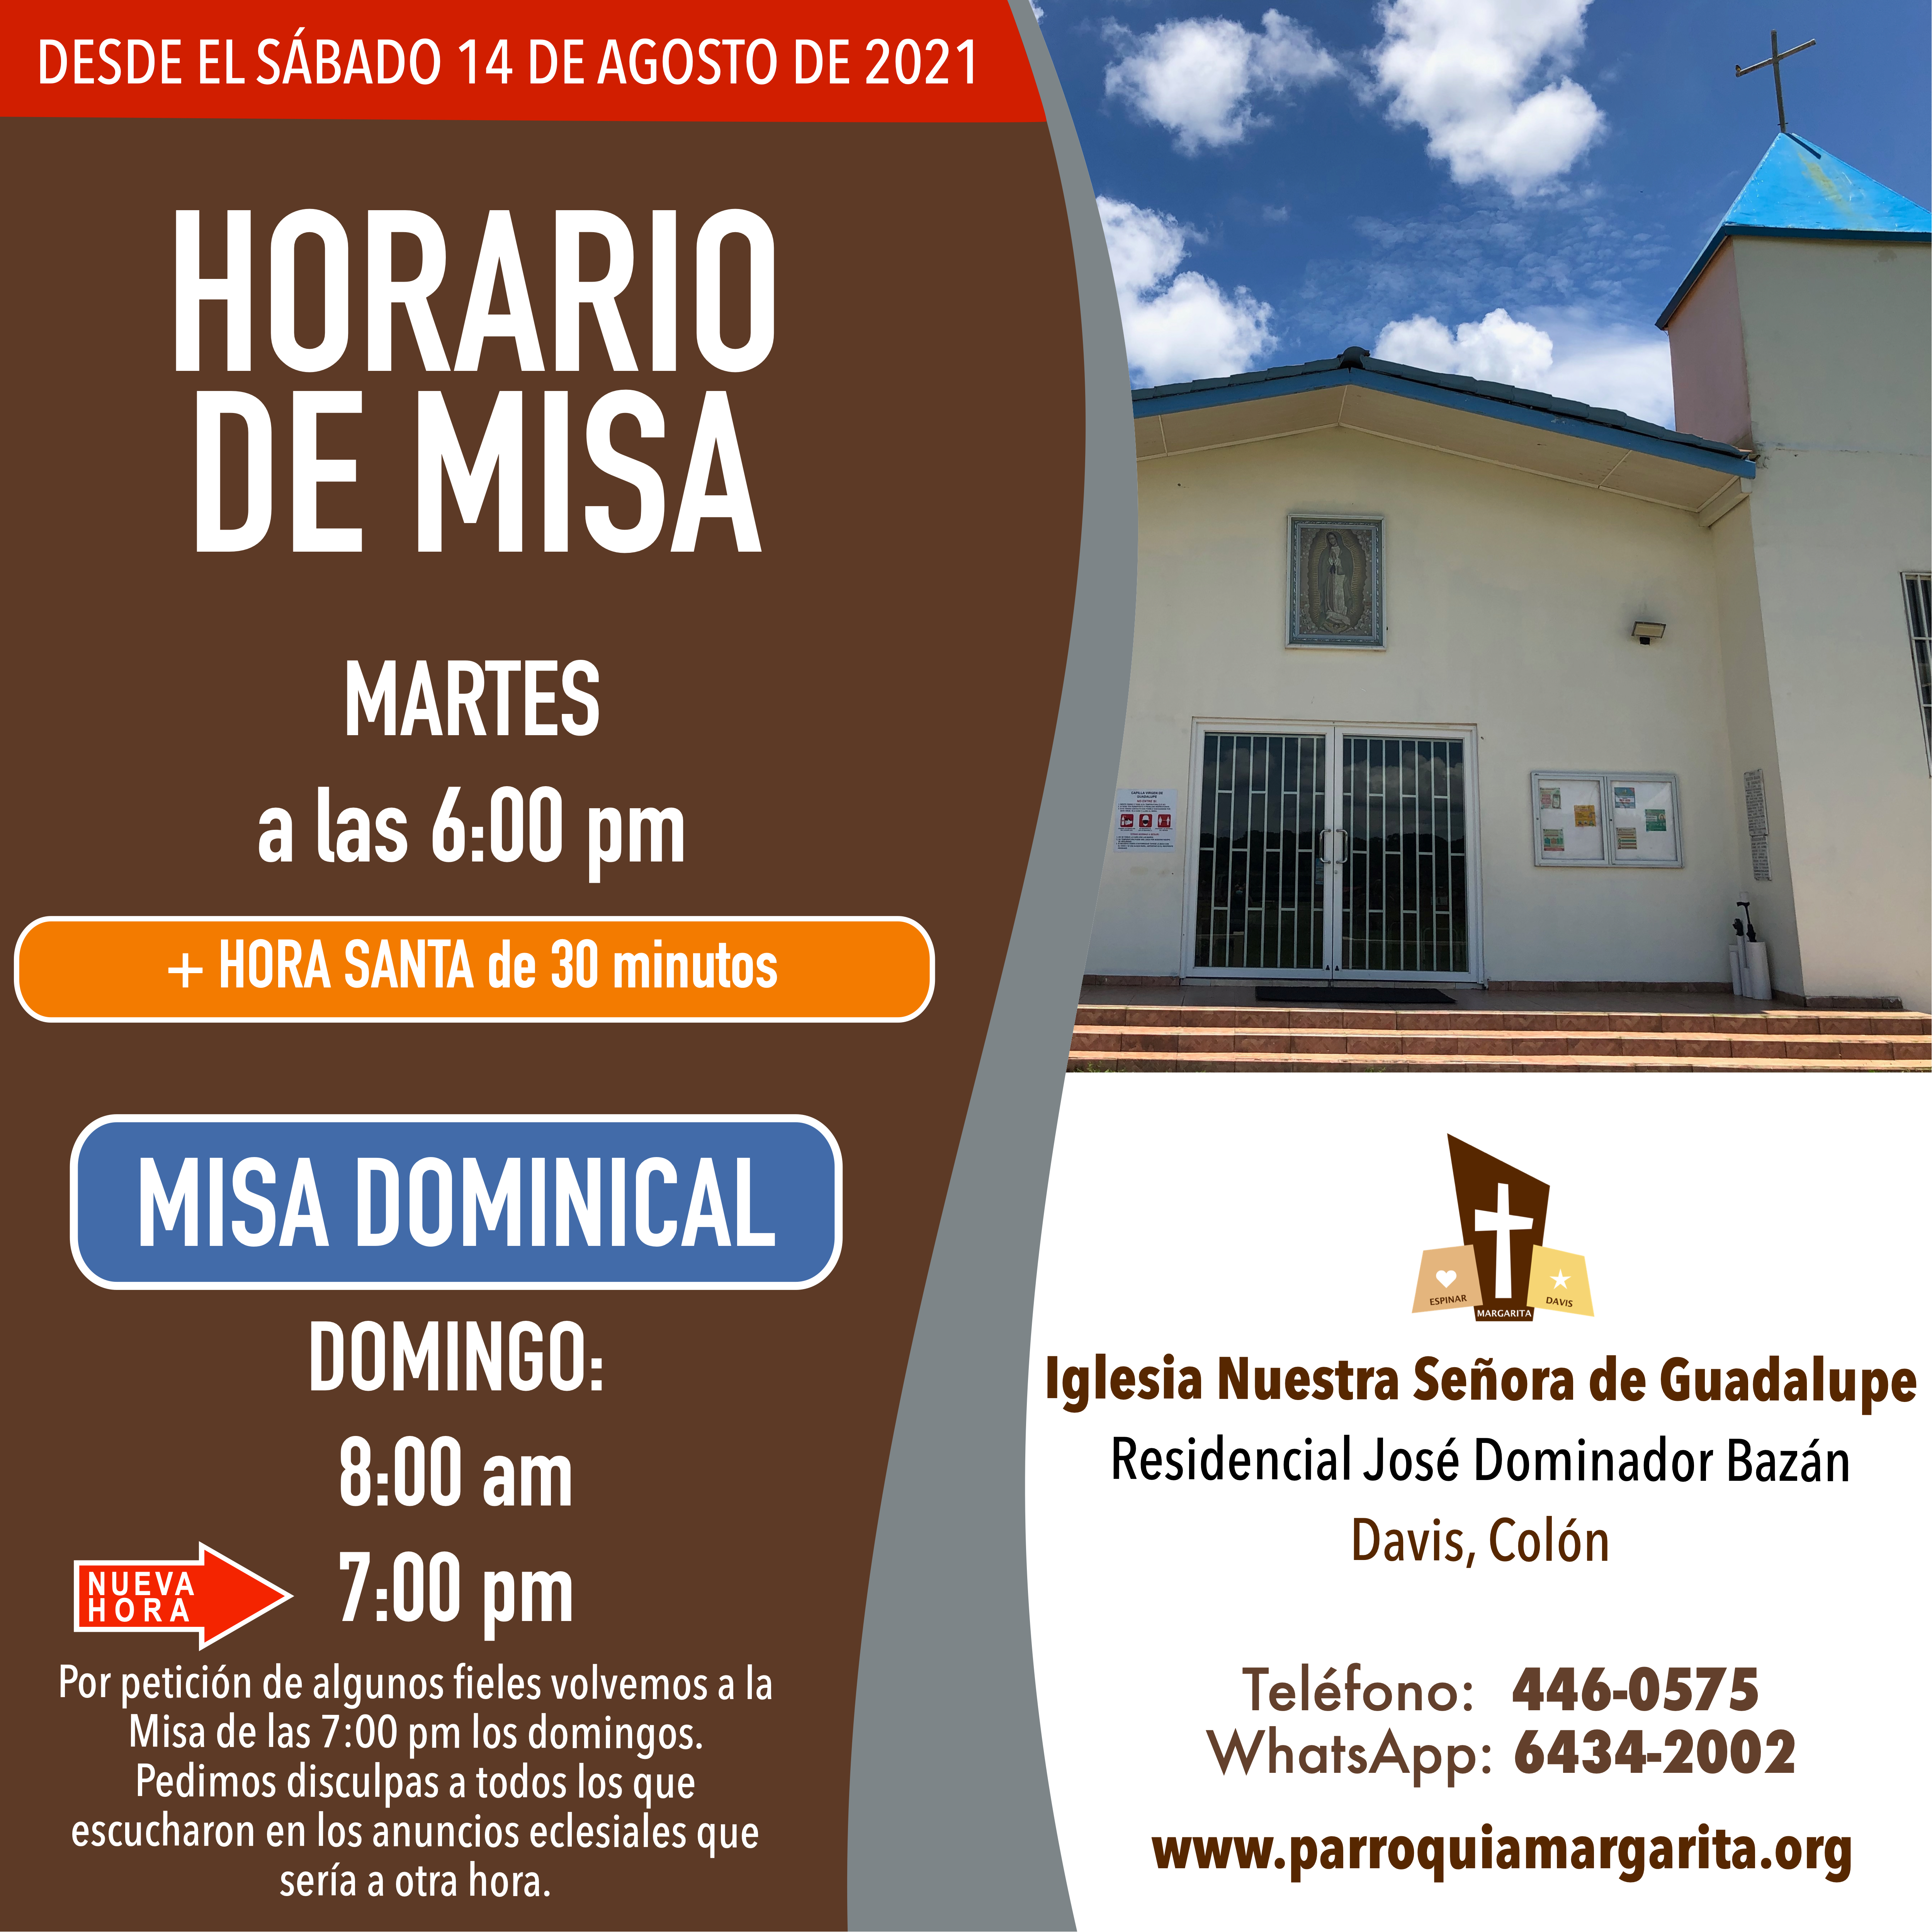 Horario de Misa en la Iglesia de Guadalupe en Davis - Parroquia Sagrada  Familia - Margarita